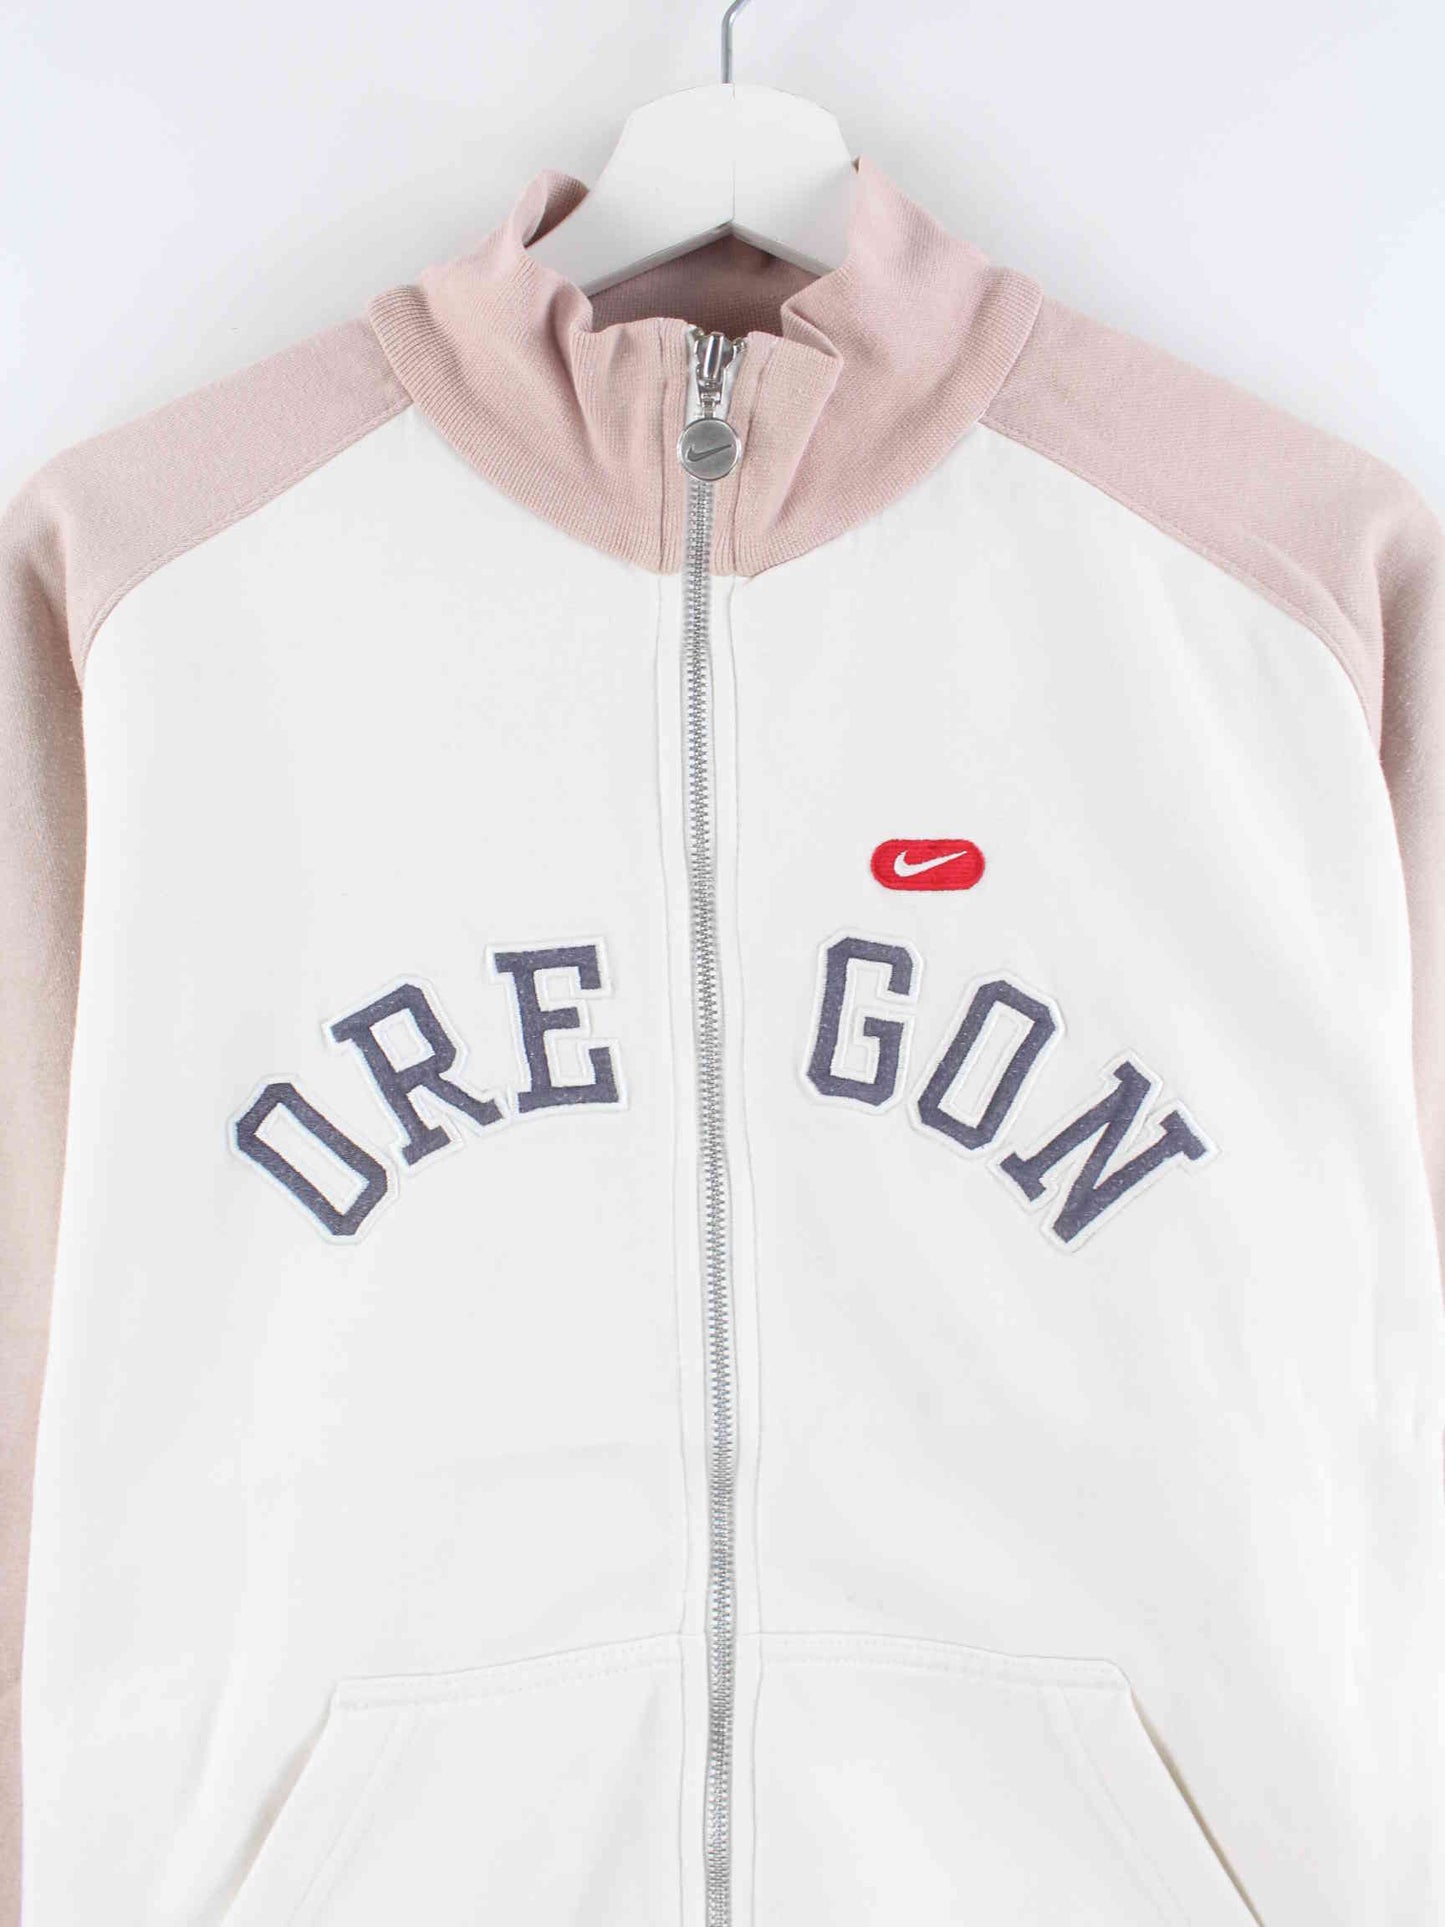 Nike Damen Zip Oregon Embroidered Sweater Weiß L